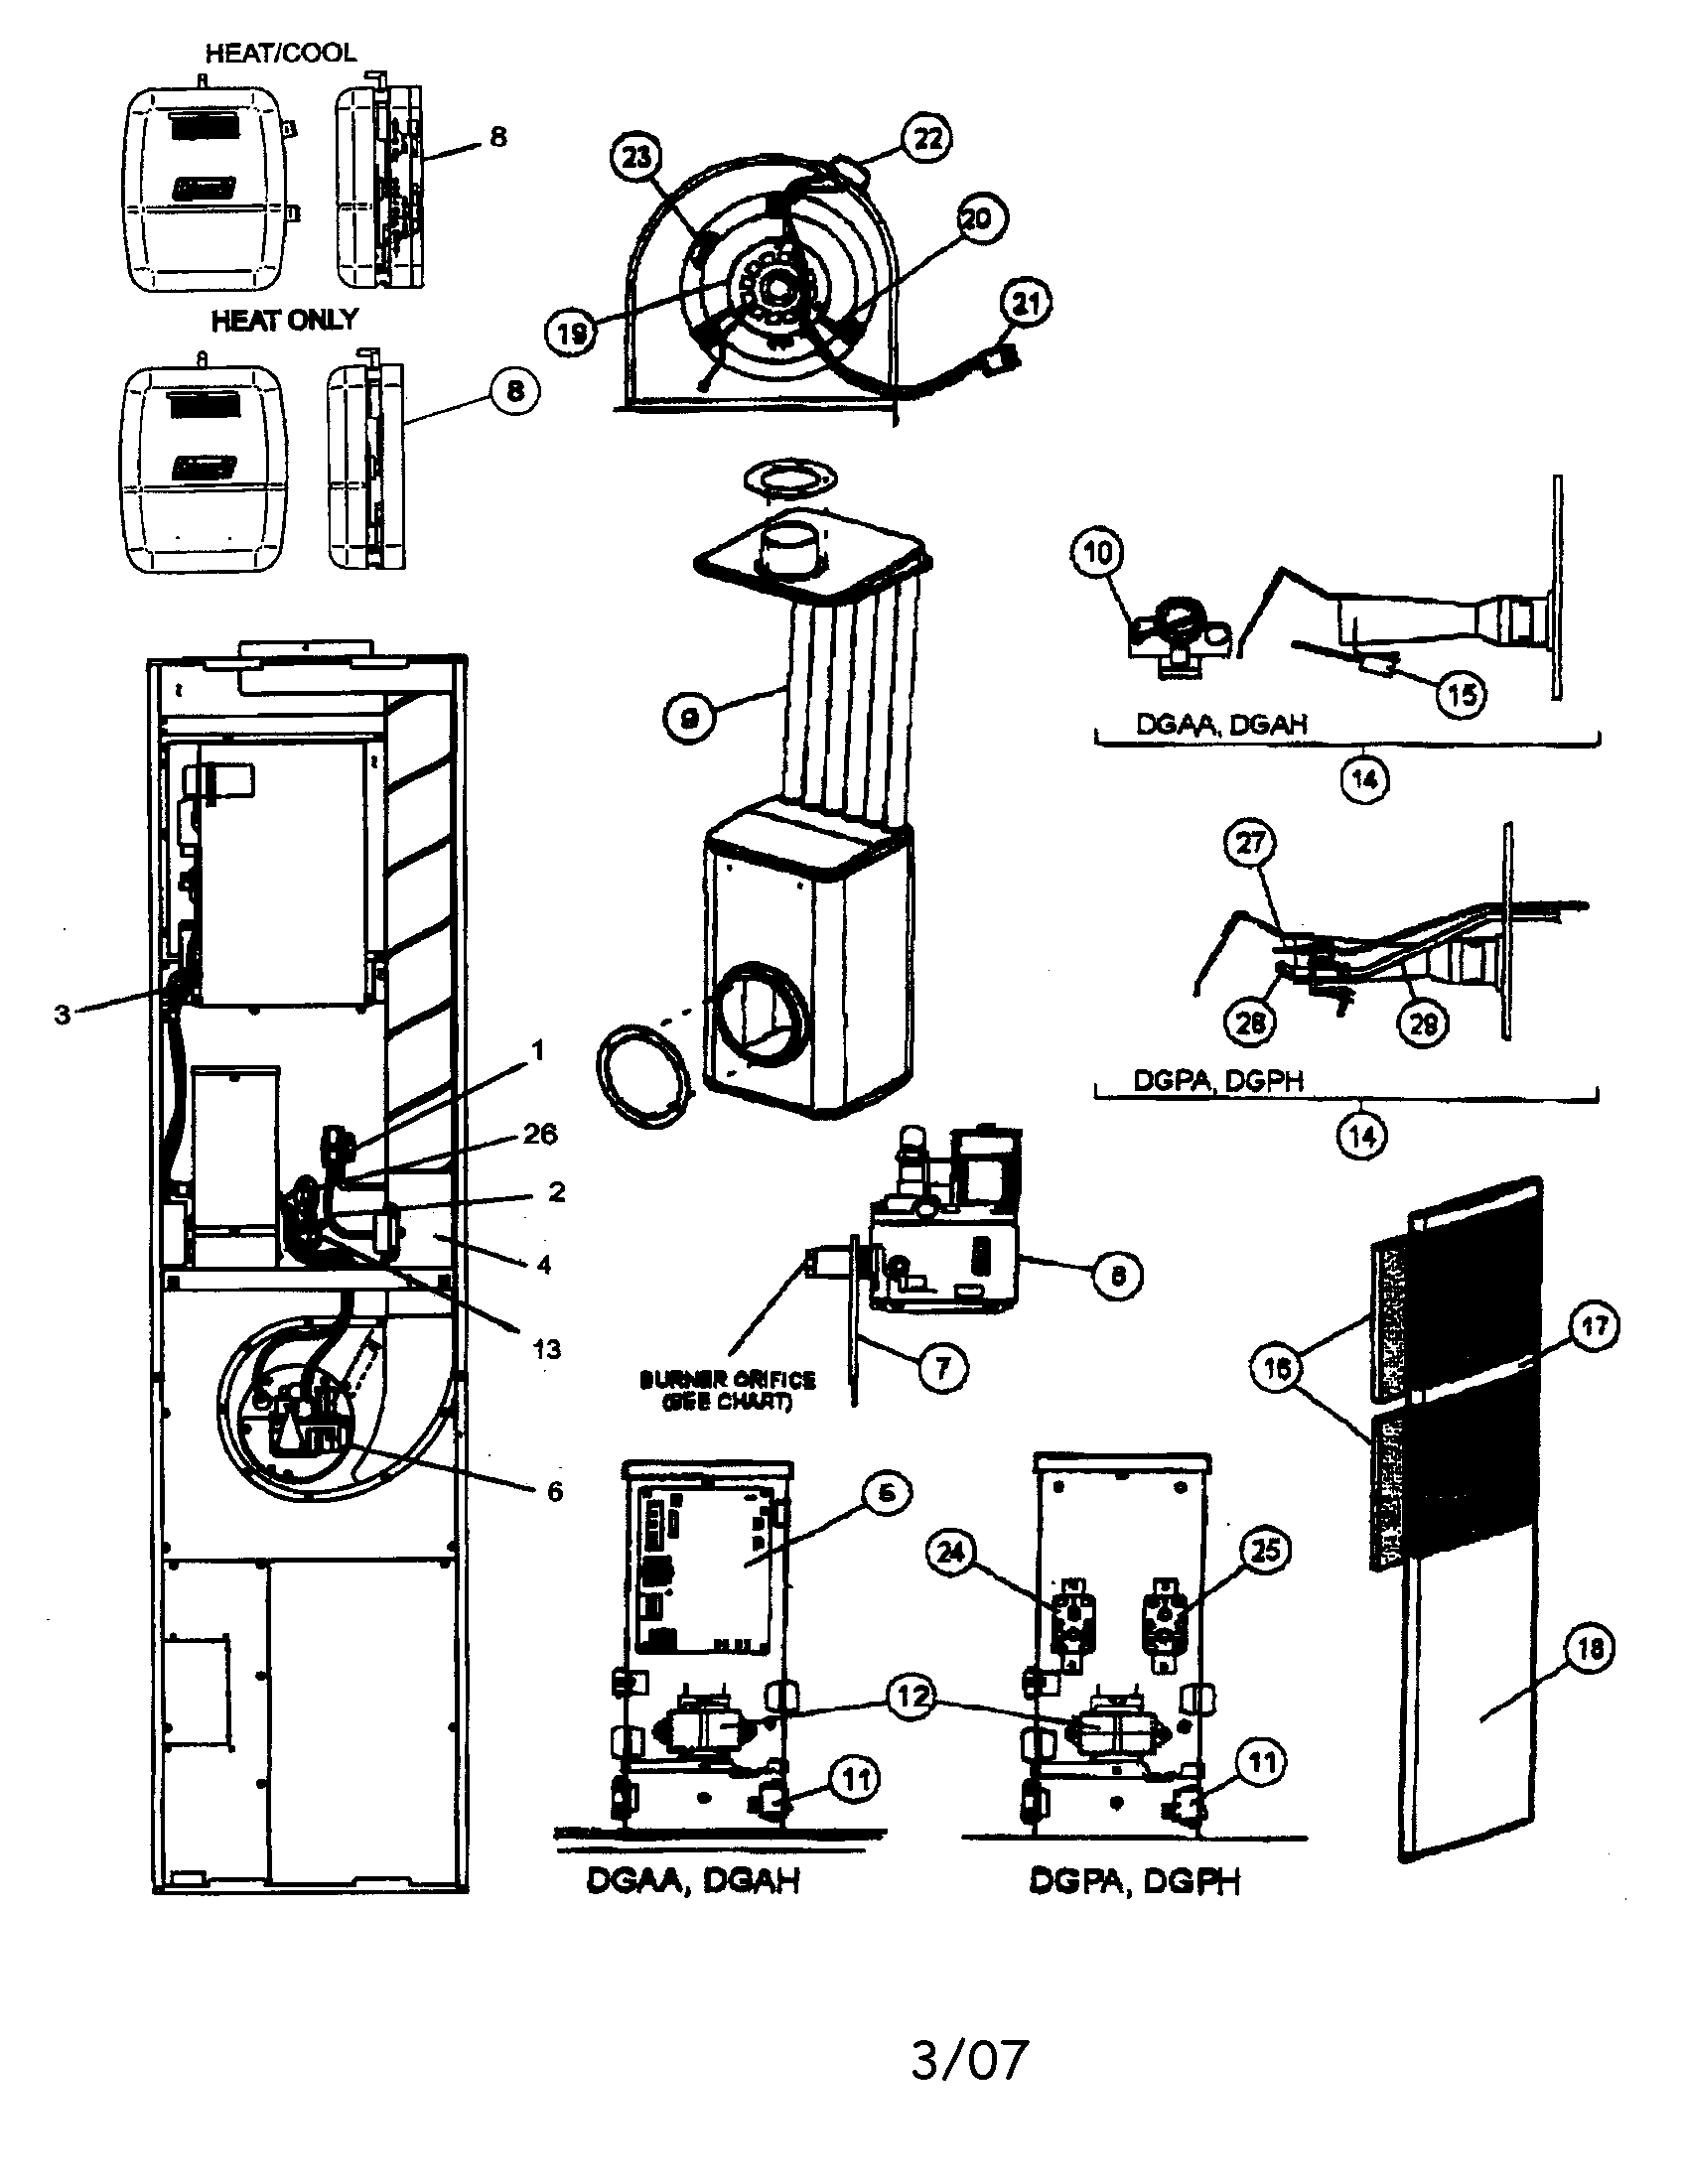 [DIAGRAM] Coleman Furnace Parts Diagrams